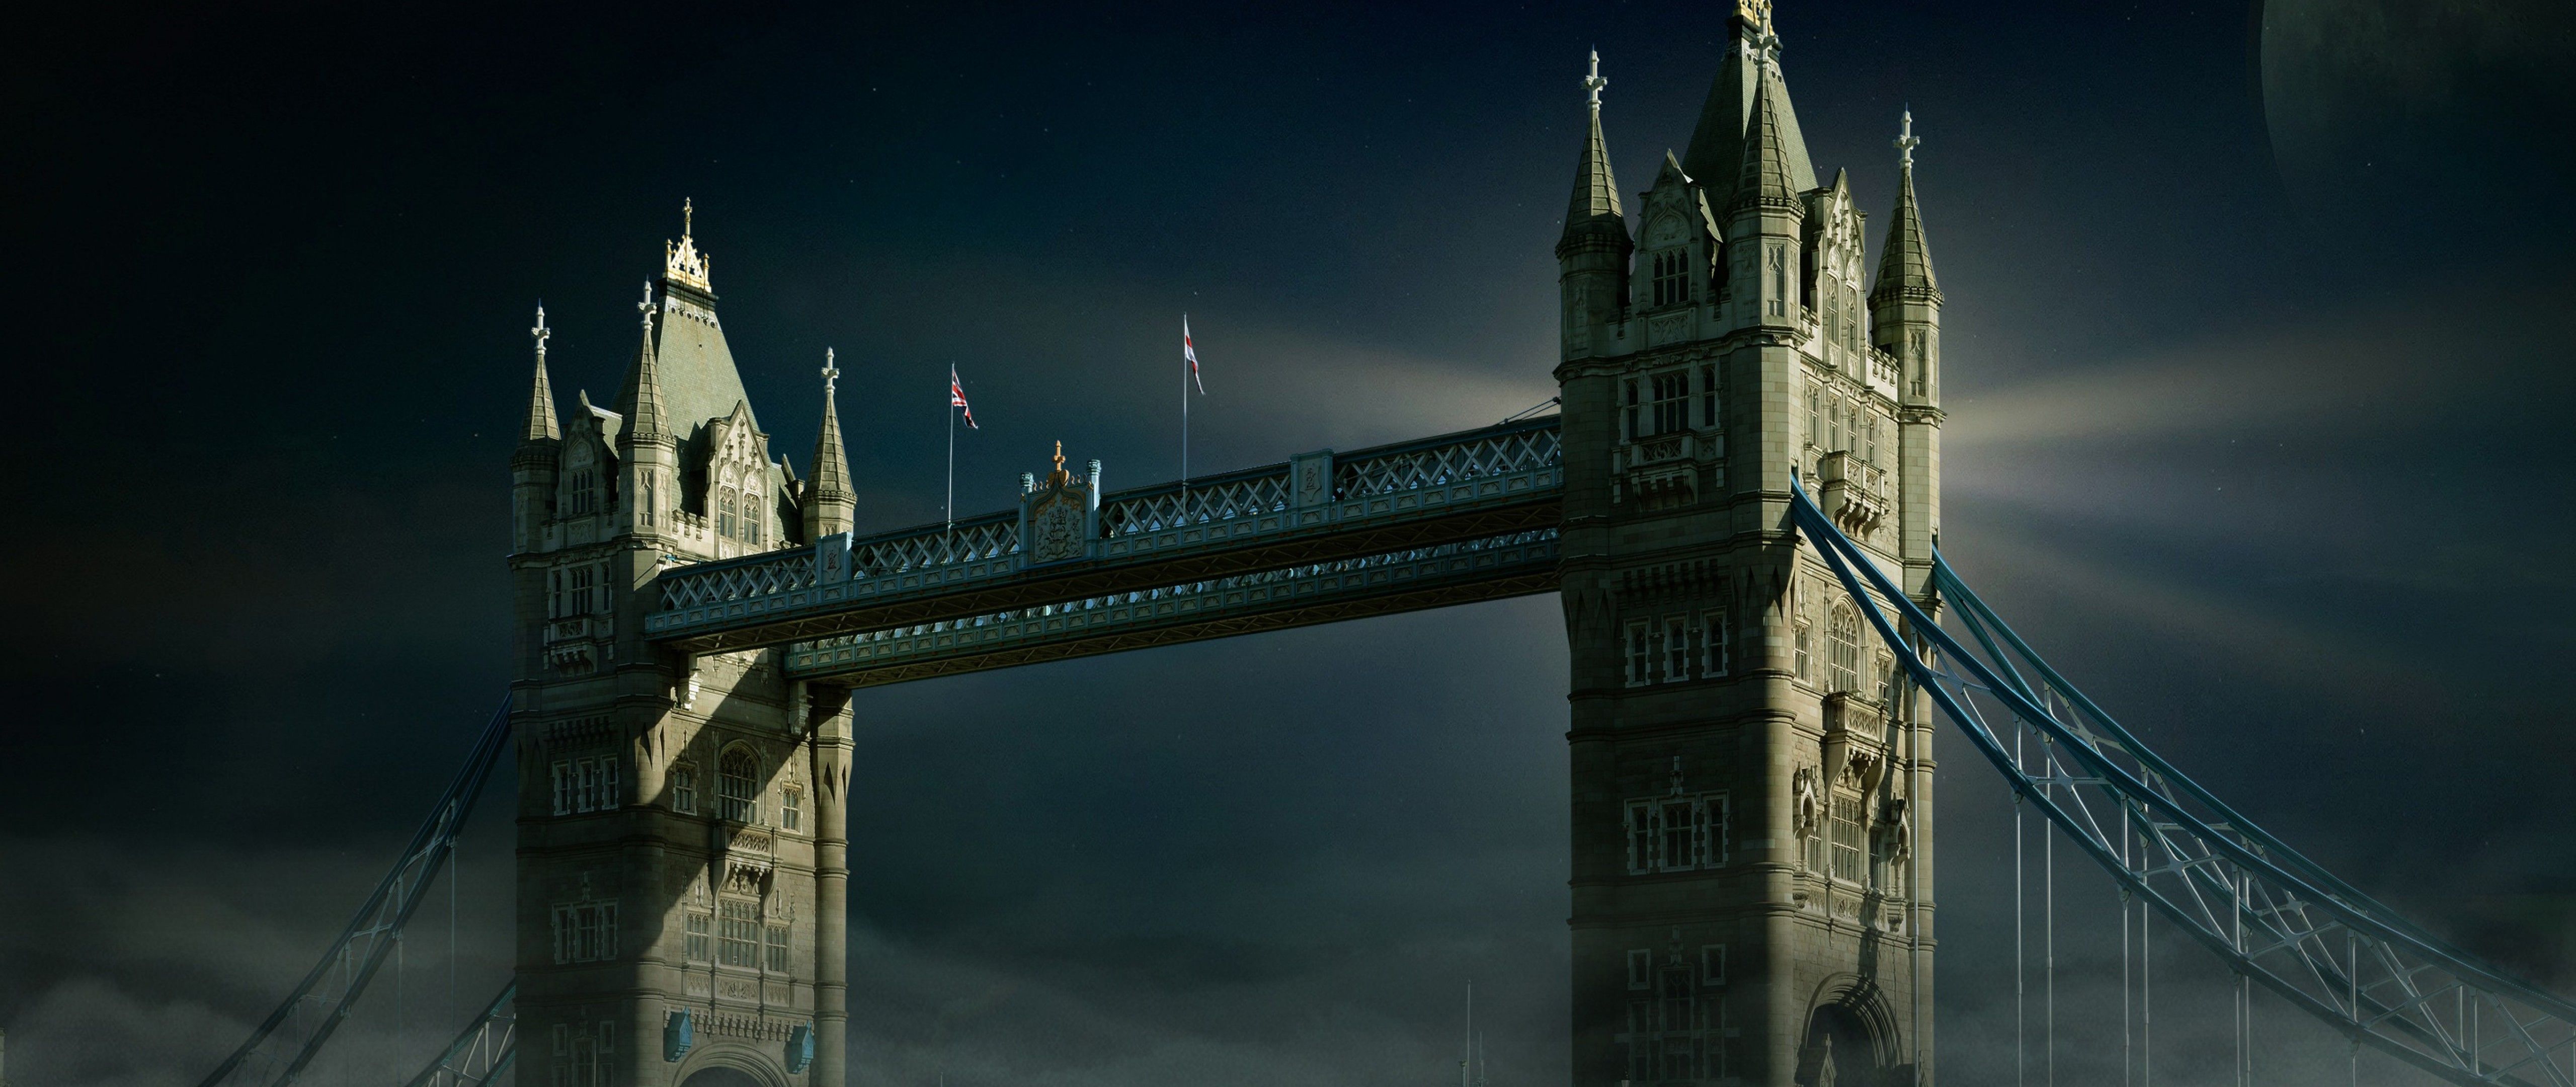 London Tower Bridge HD Wallpaper for Desktop and Mobiles 4K Ultra